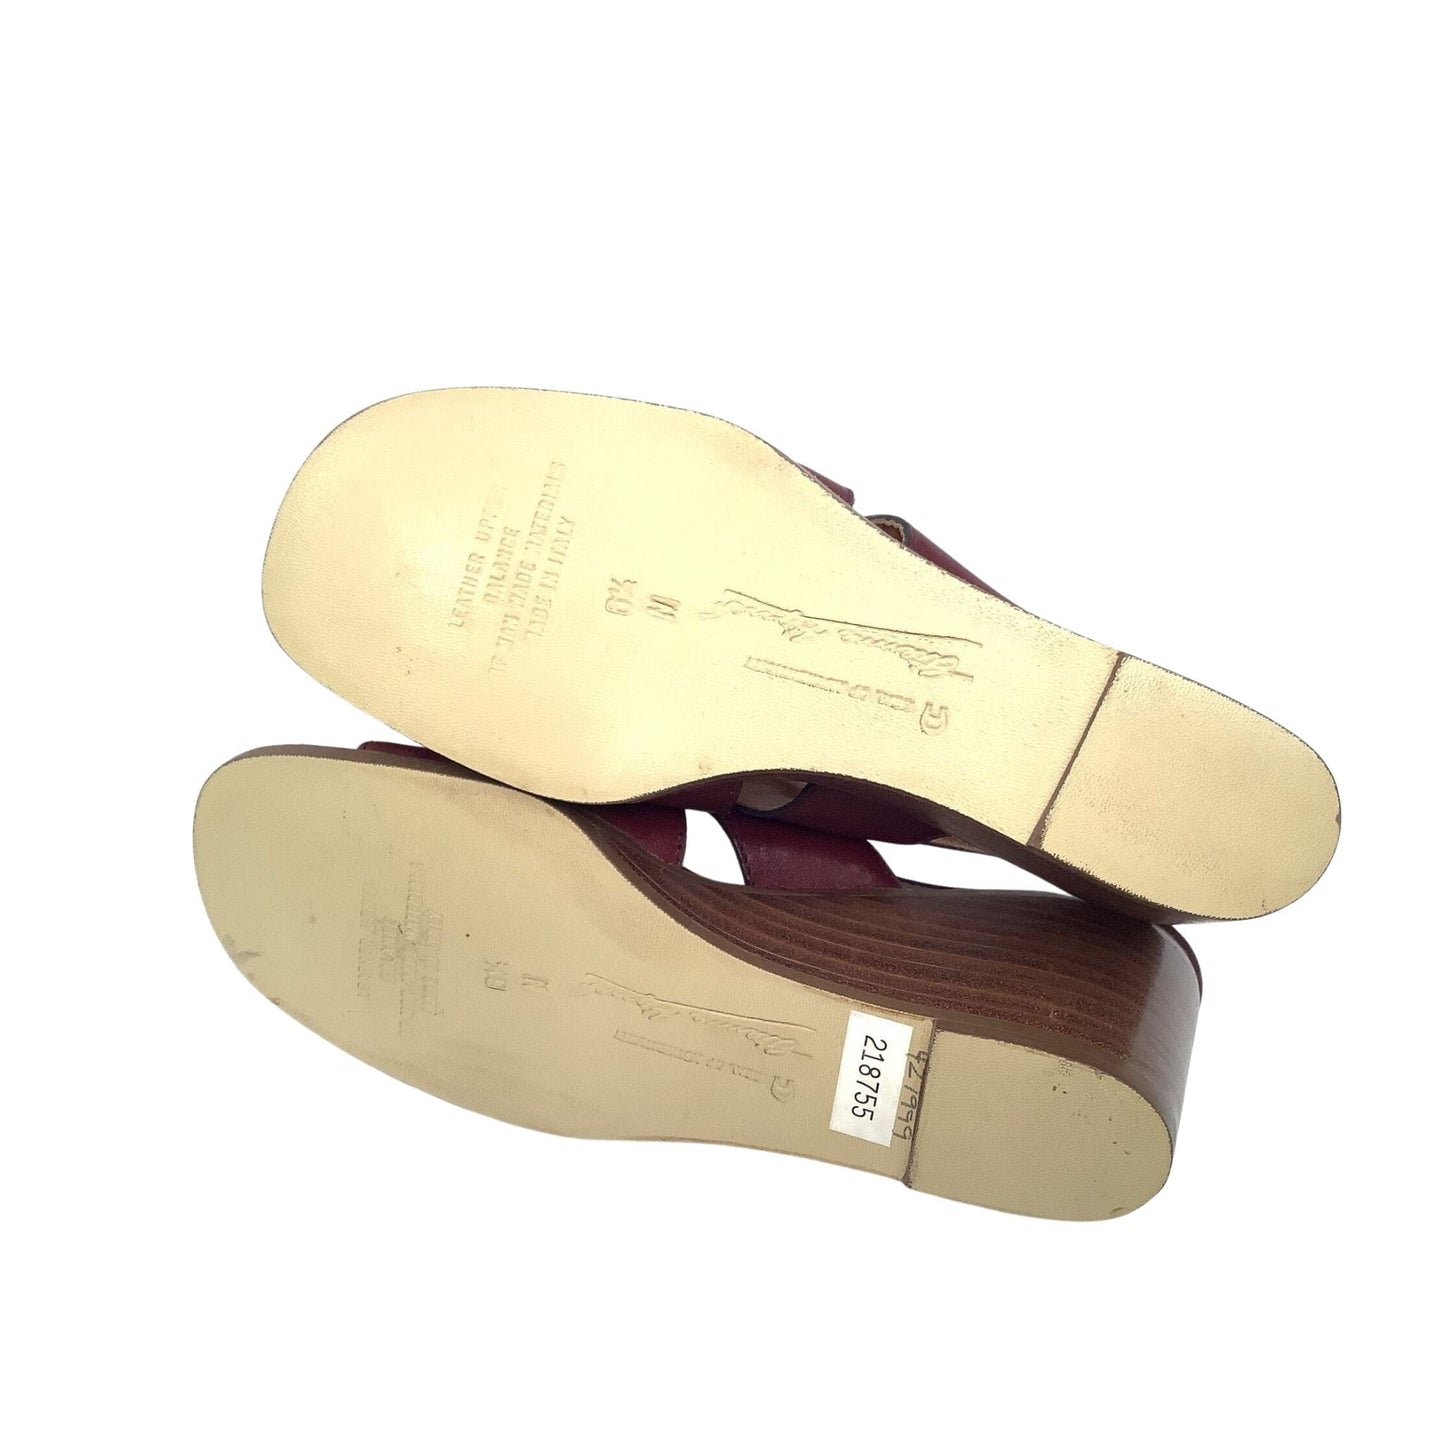 Etienne Aigner Wedge Sandals 6.5 / Burgundy / Vintage 1970s